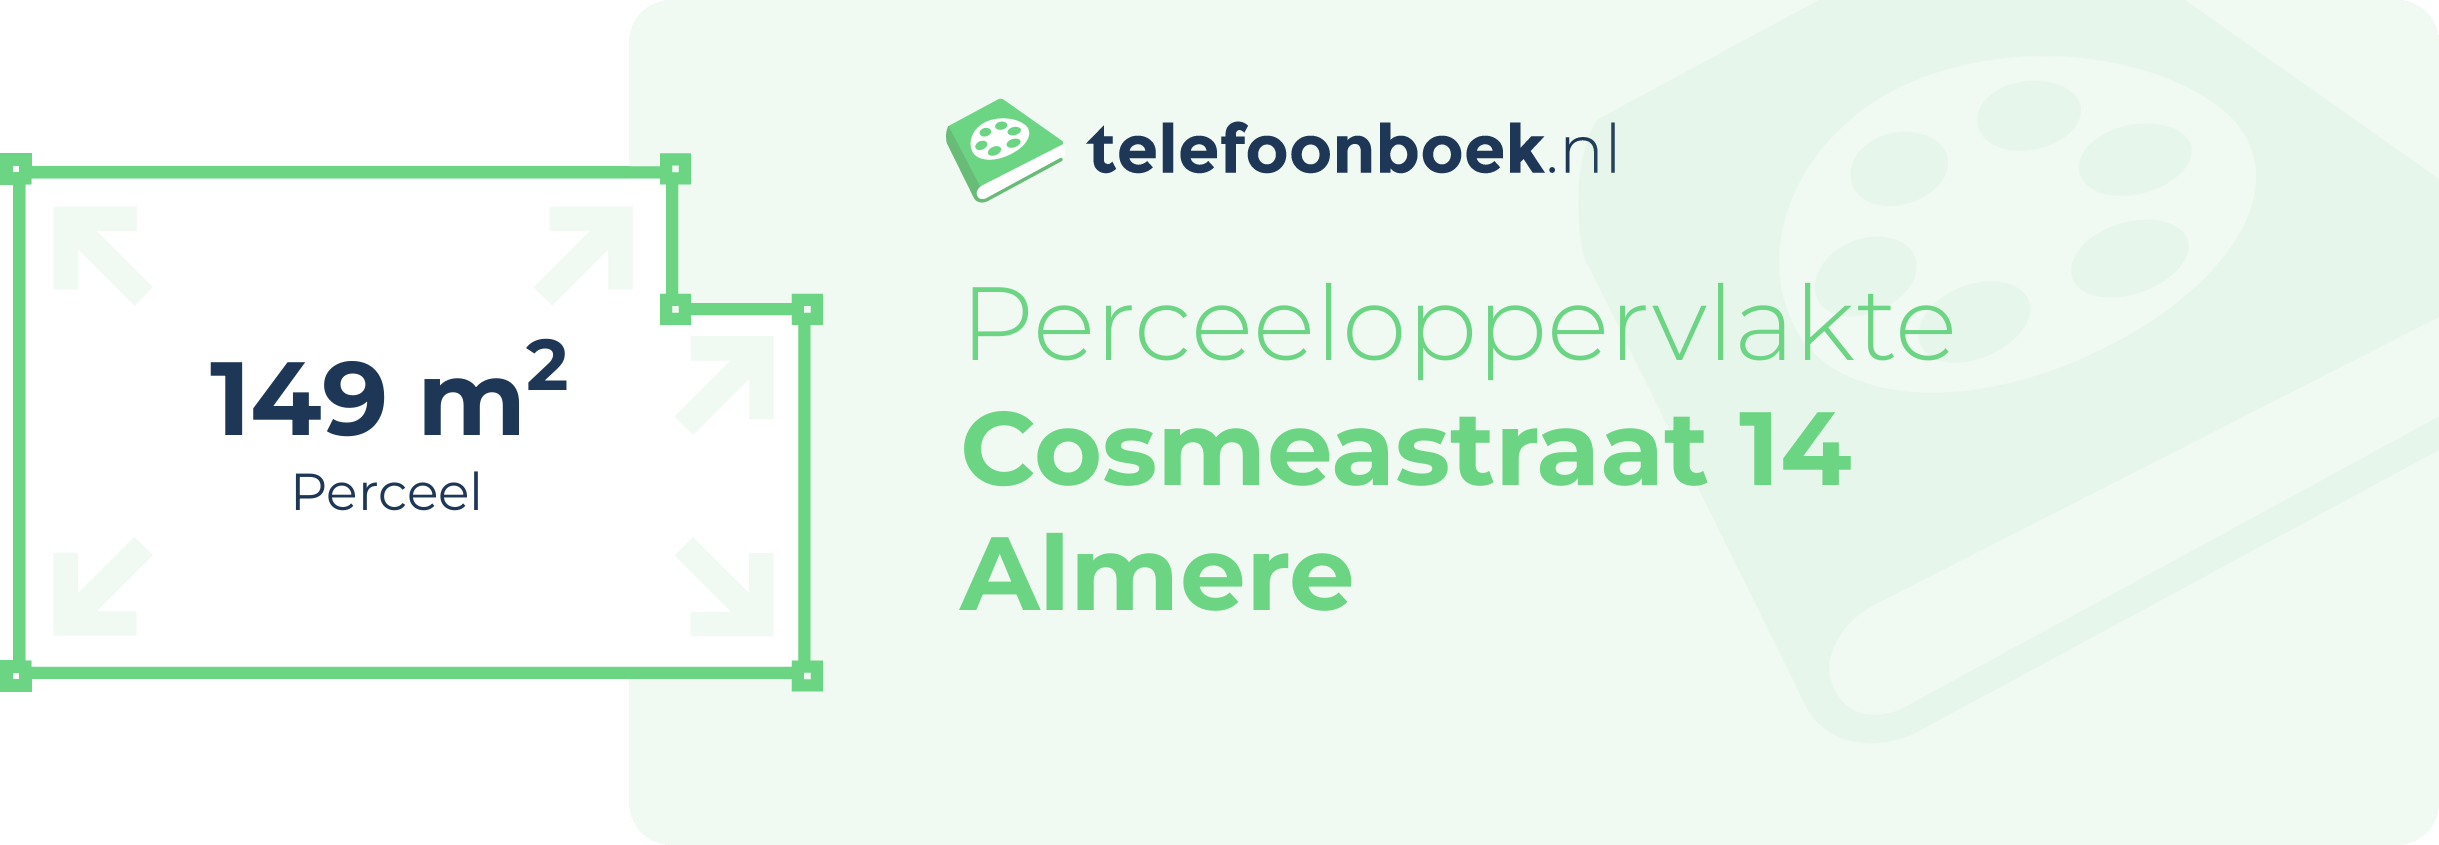 Perceeloppervlakte Cosmeastraat 14 Almere